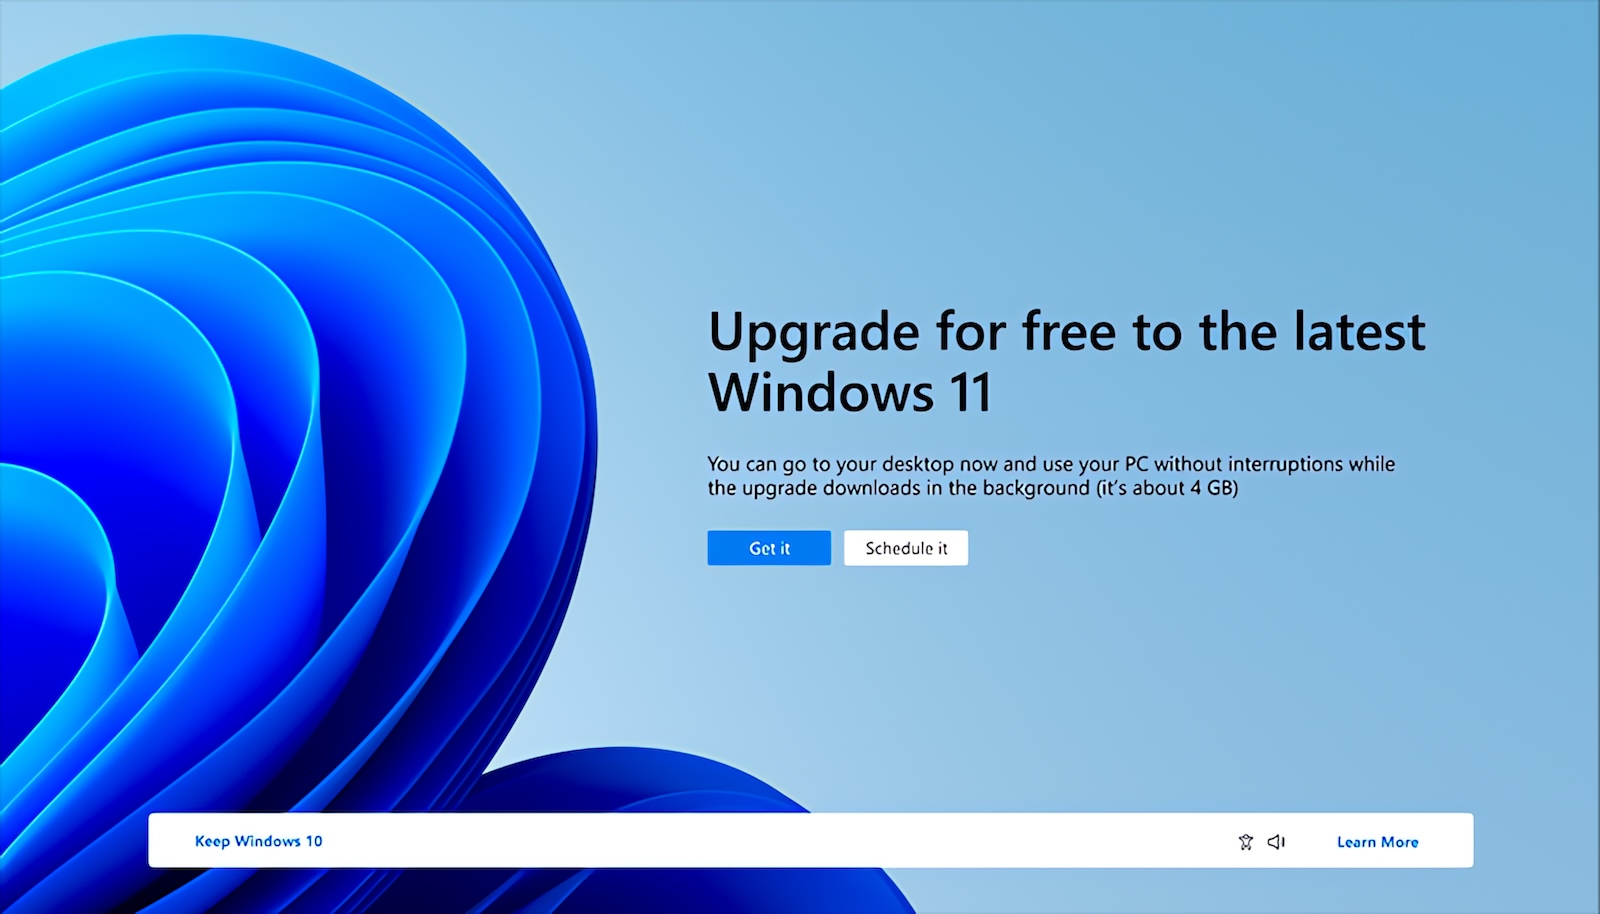 Windows 11 upgrade nag screen